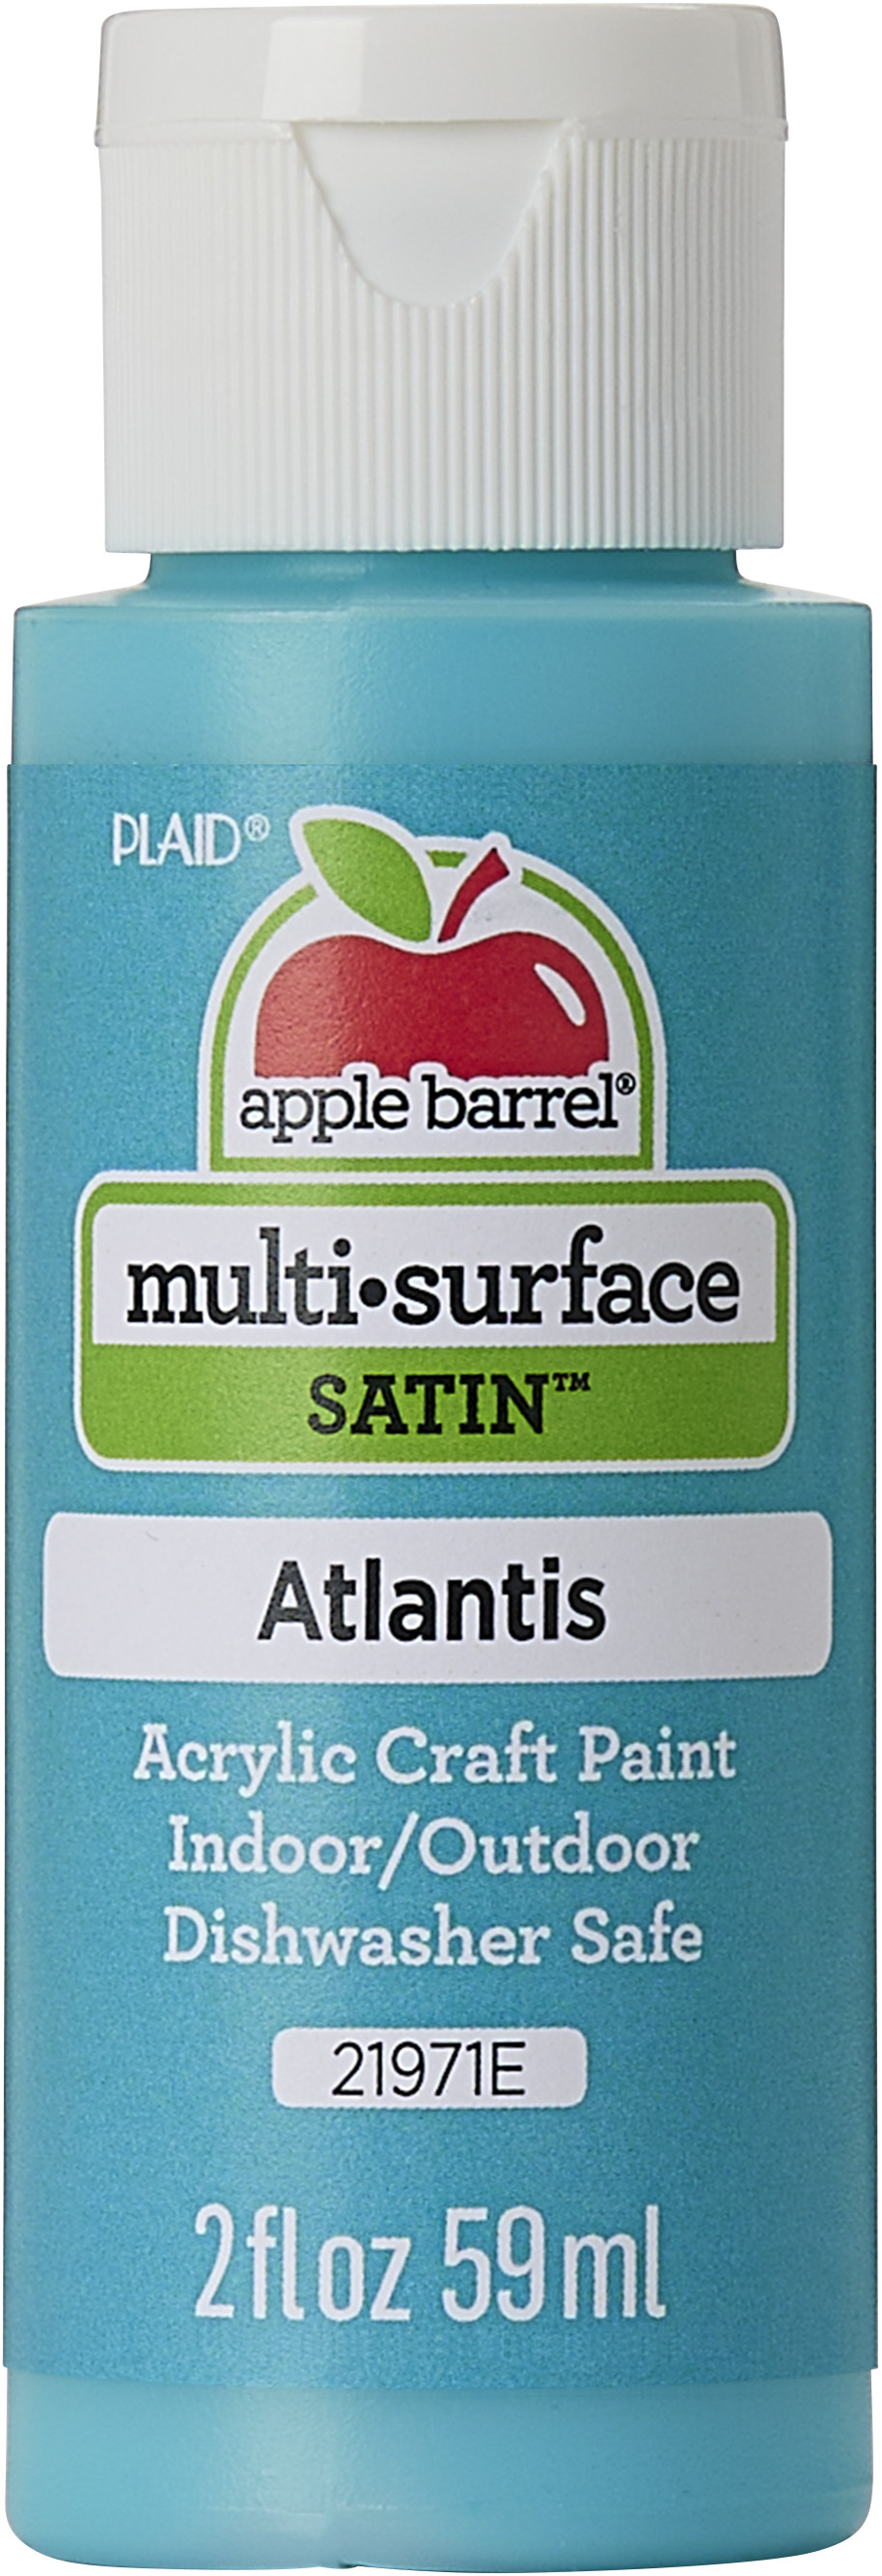 Apple Barrel Multi-Surface Acrylic Craft Paint, Satin Finish, Atlantis, 2 fl oz - image 1 of 14